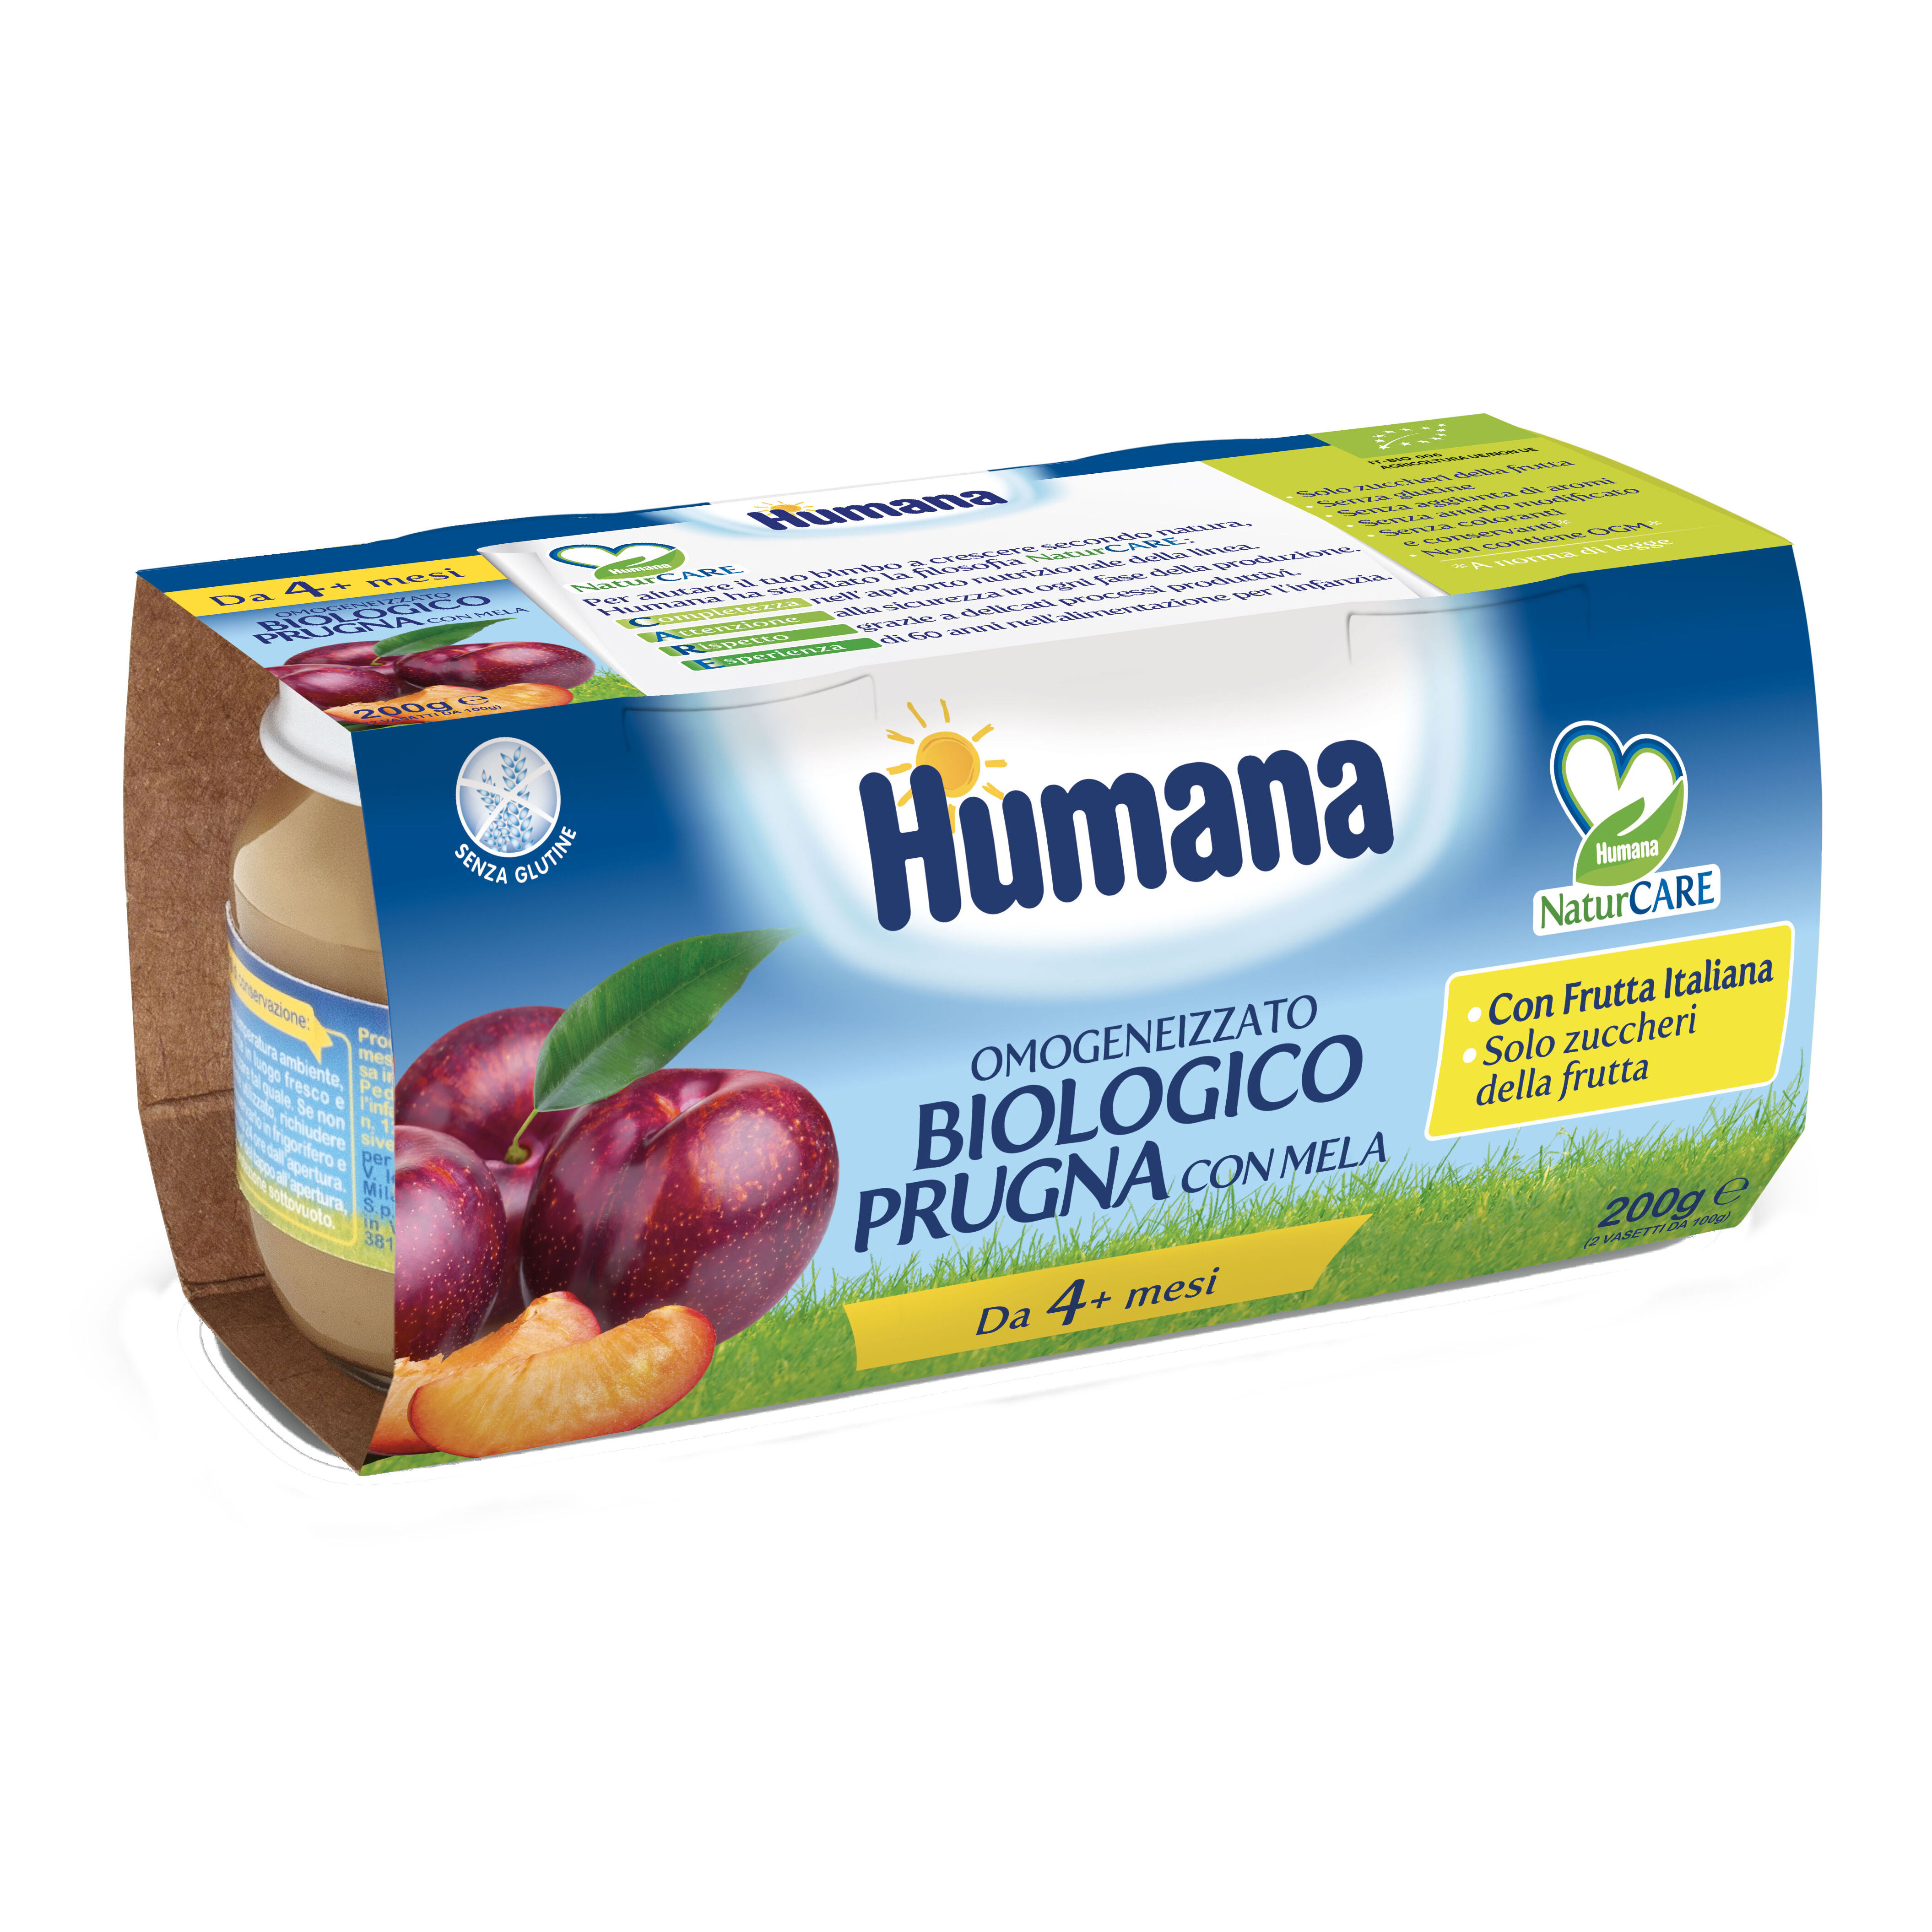 Humana Italia Spa Omo Humana Prugna 2x100g